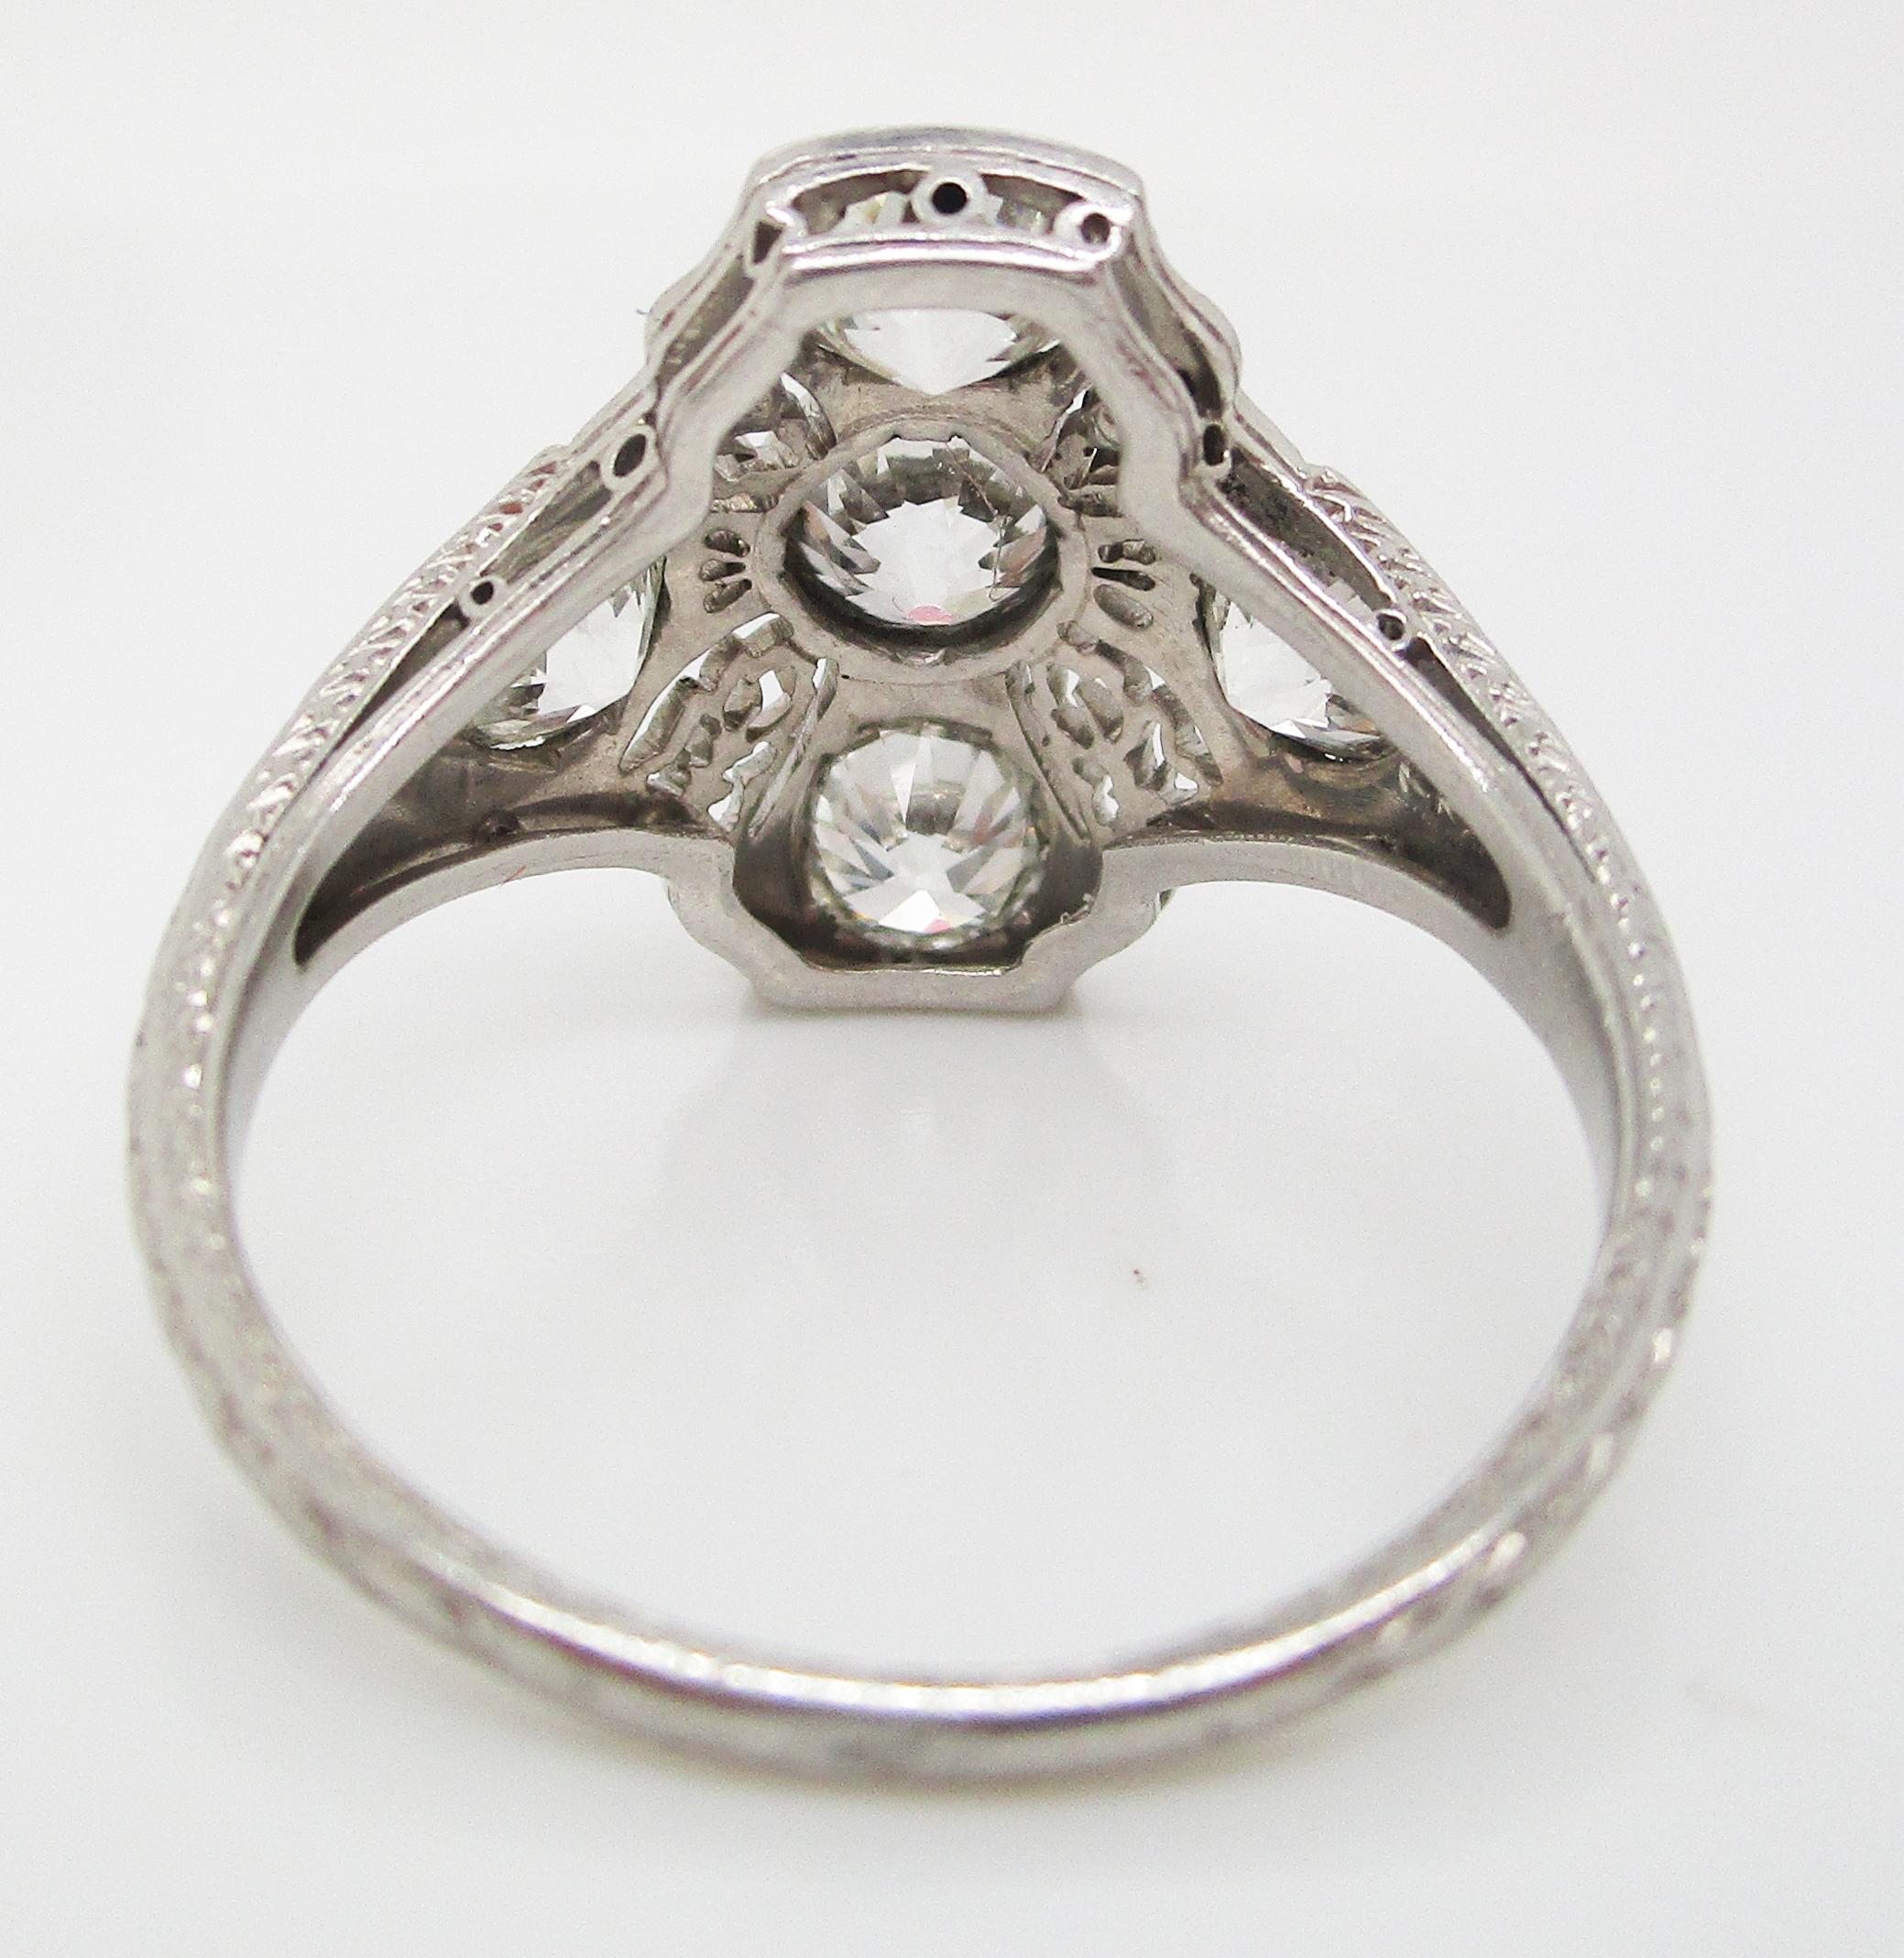 Deco Platinum Filigree 3 Cts. of European Cut Diamond Ring Size 8.5 For Sale 2